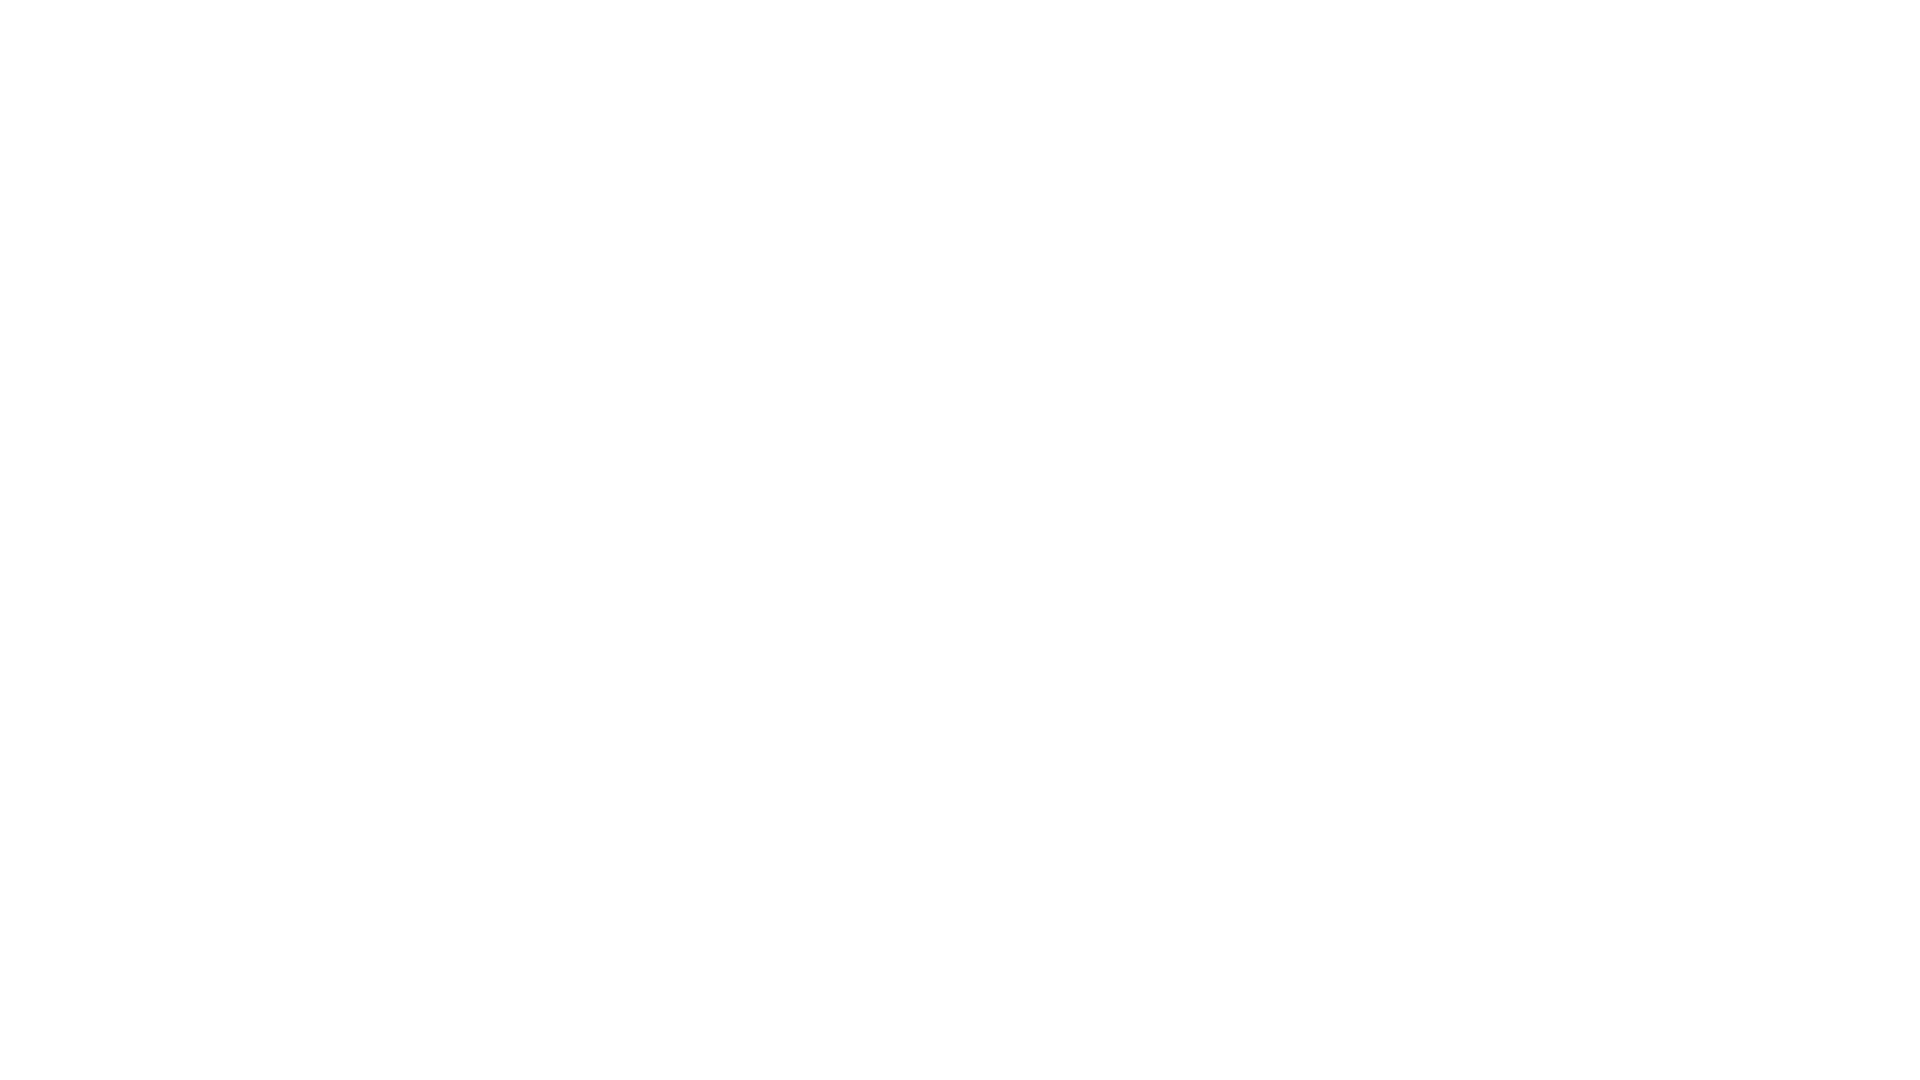 Kurs Teologiczny logo